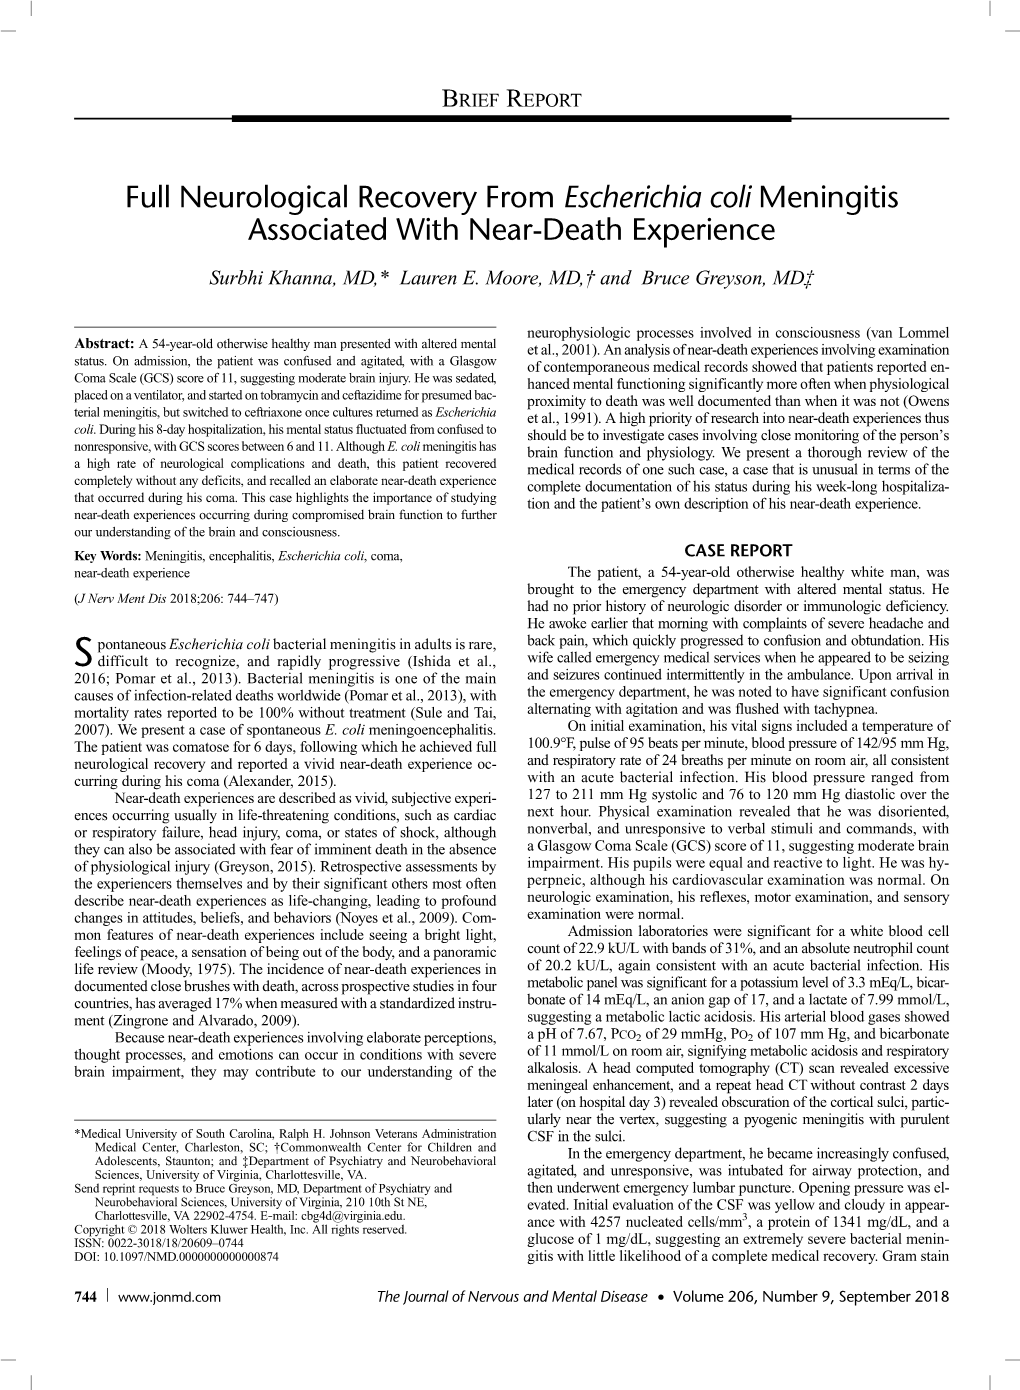 Full Neurological Recovery from Escherichia Coli Meningitis Associated with Near-Death Experience